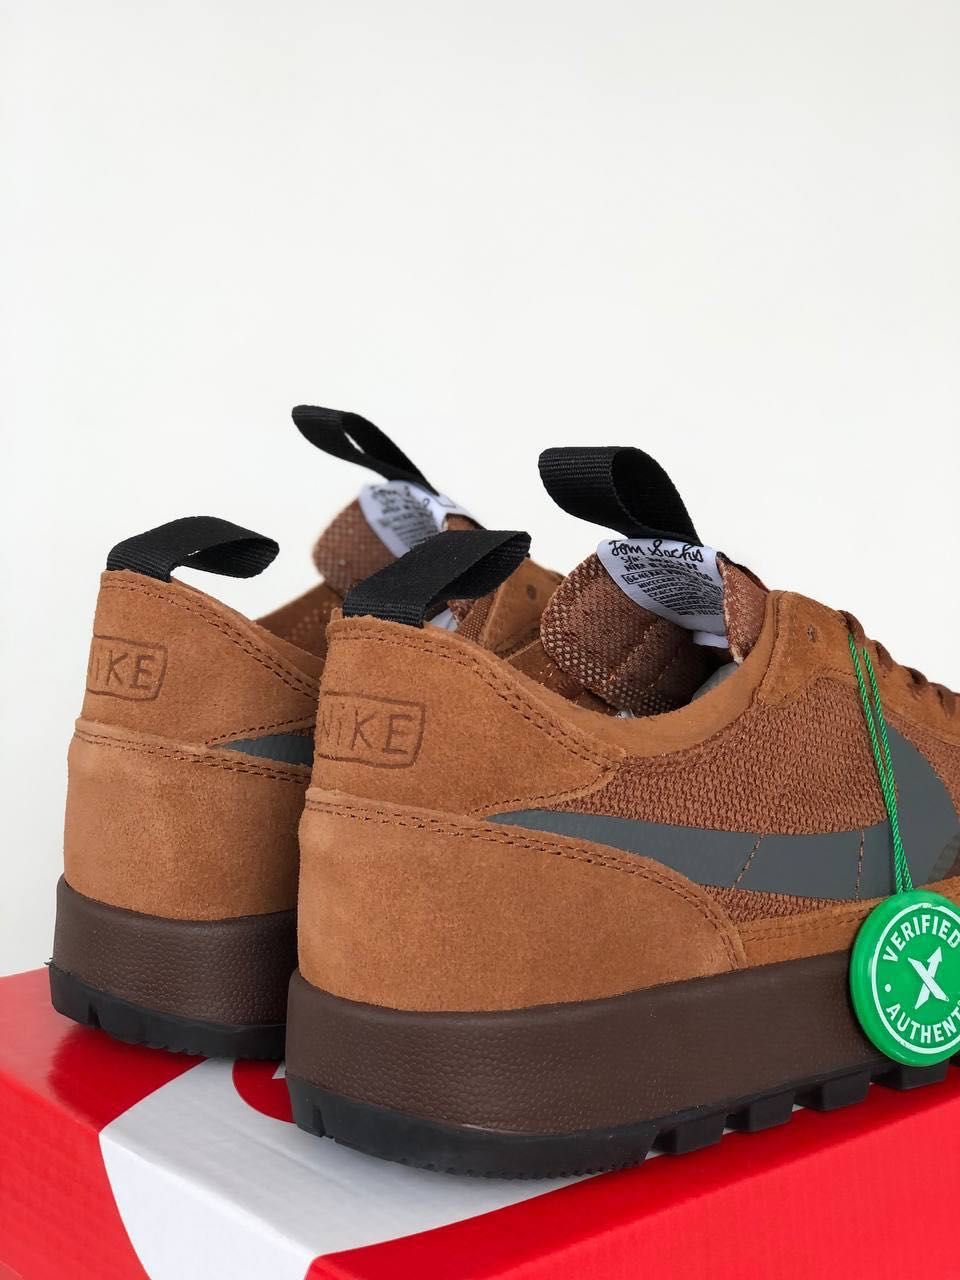 Мужские кроссовки Nike Craft x Tom Shachs Brown. Размеры 40-45